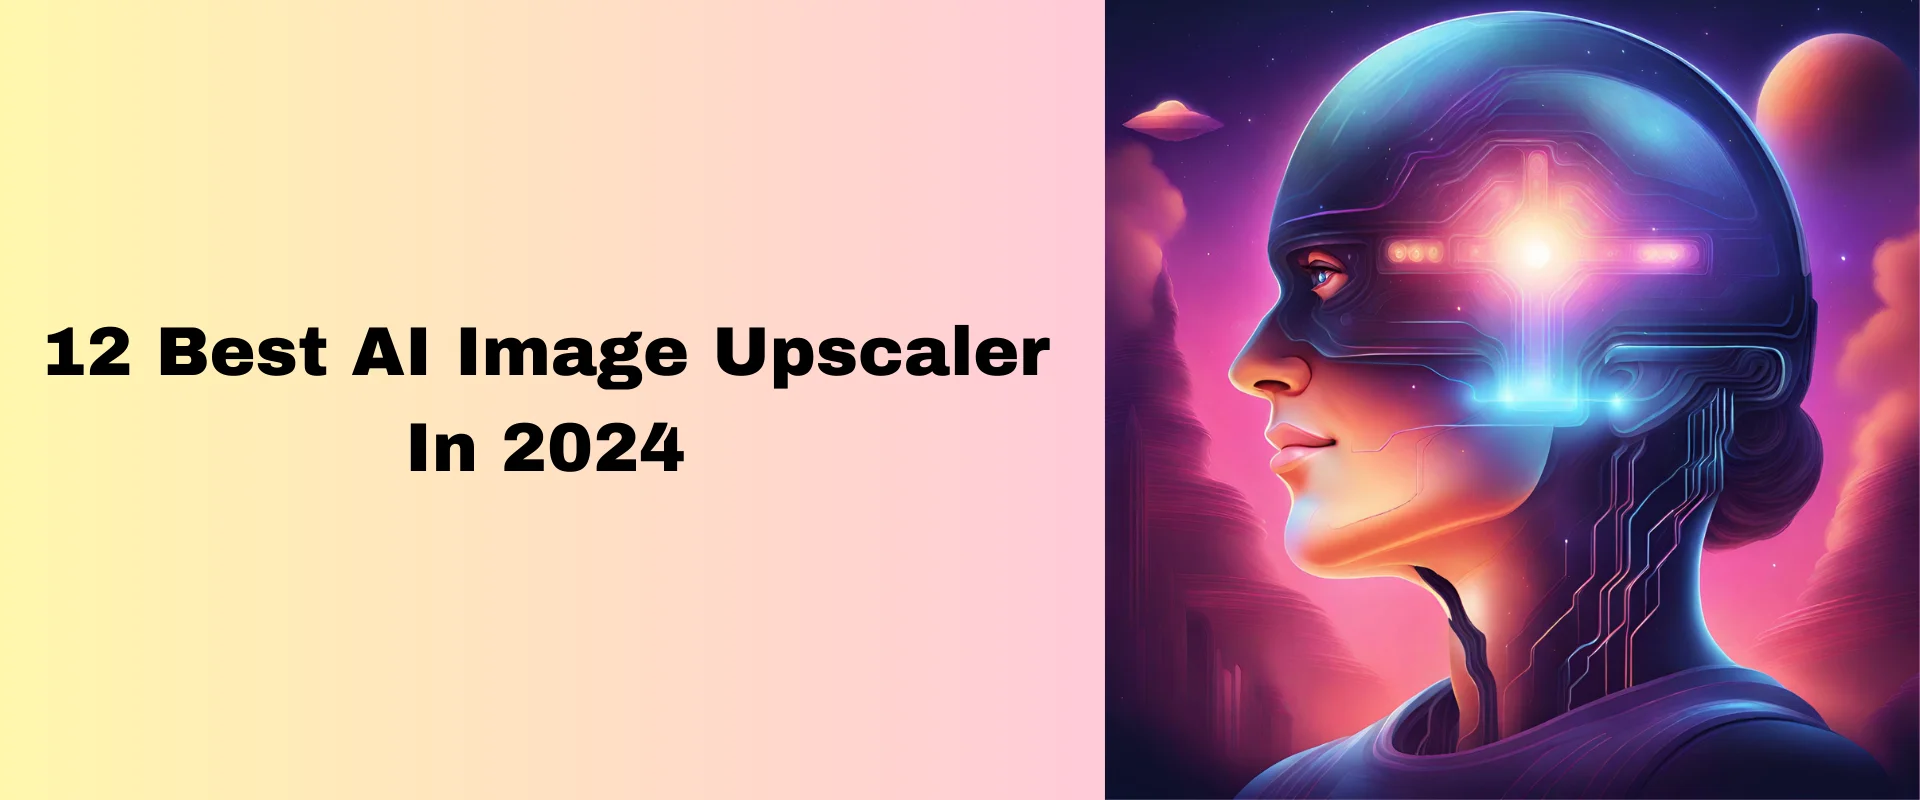 12 Best AI Image Upscaler to Enhance Image In 2024